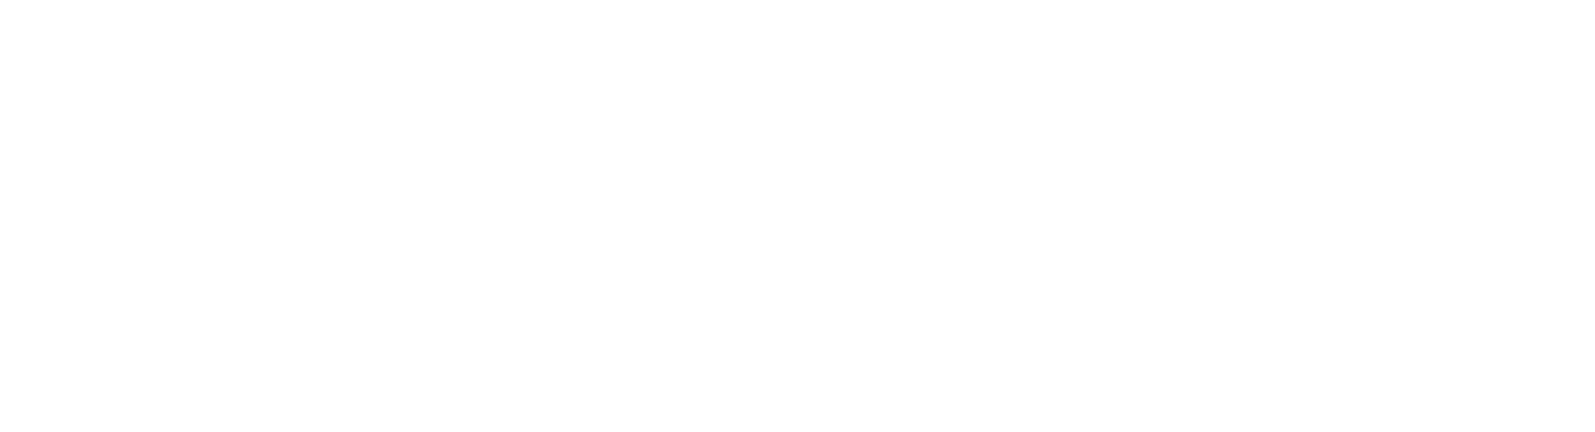 Jardine Cycle & Carriage logo grand pour les fonds sombres (PNG transparent)